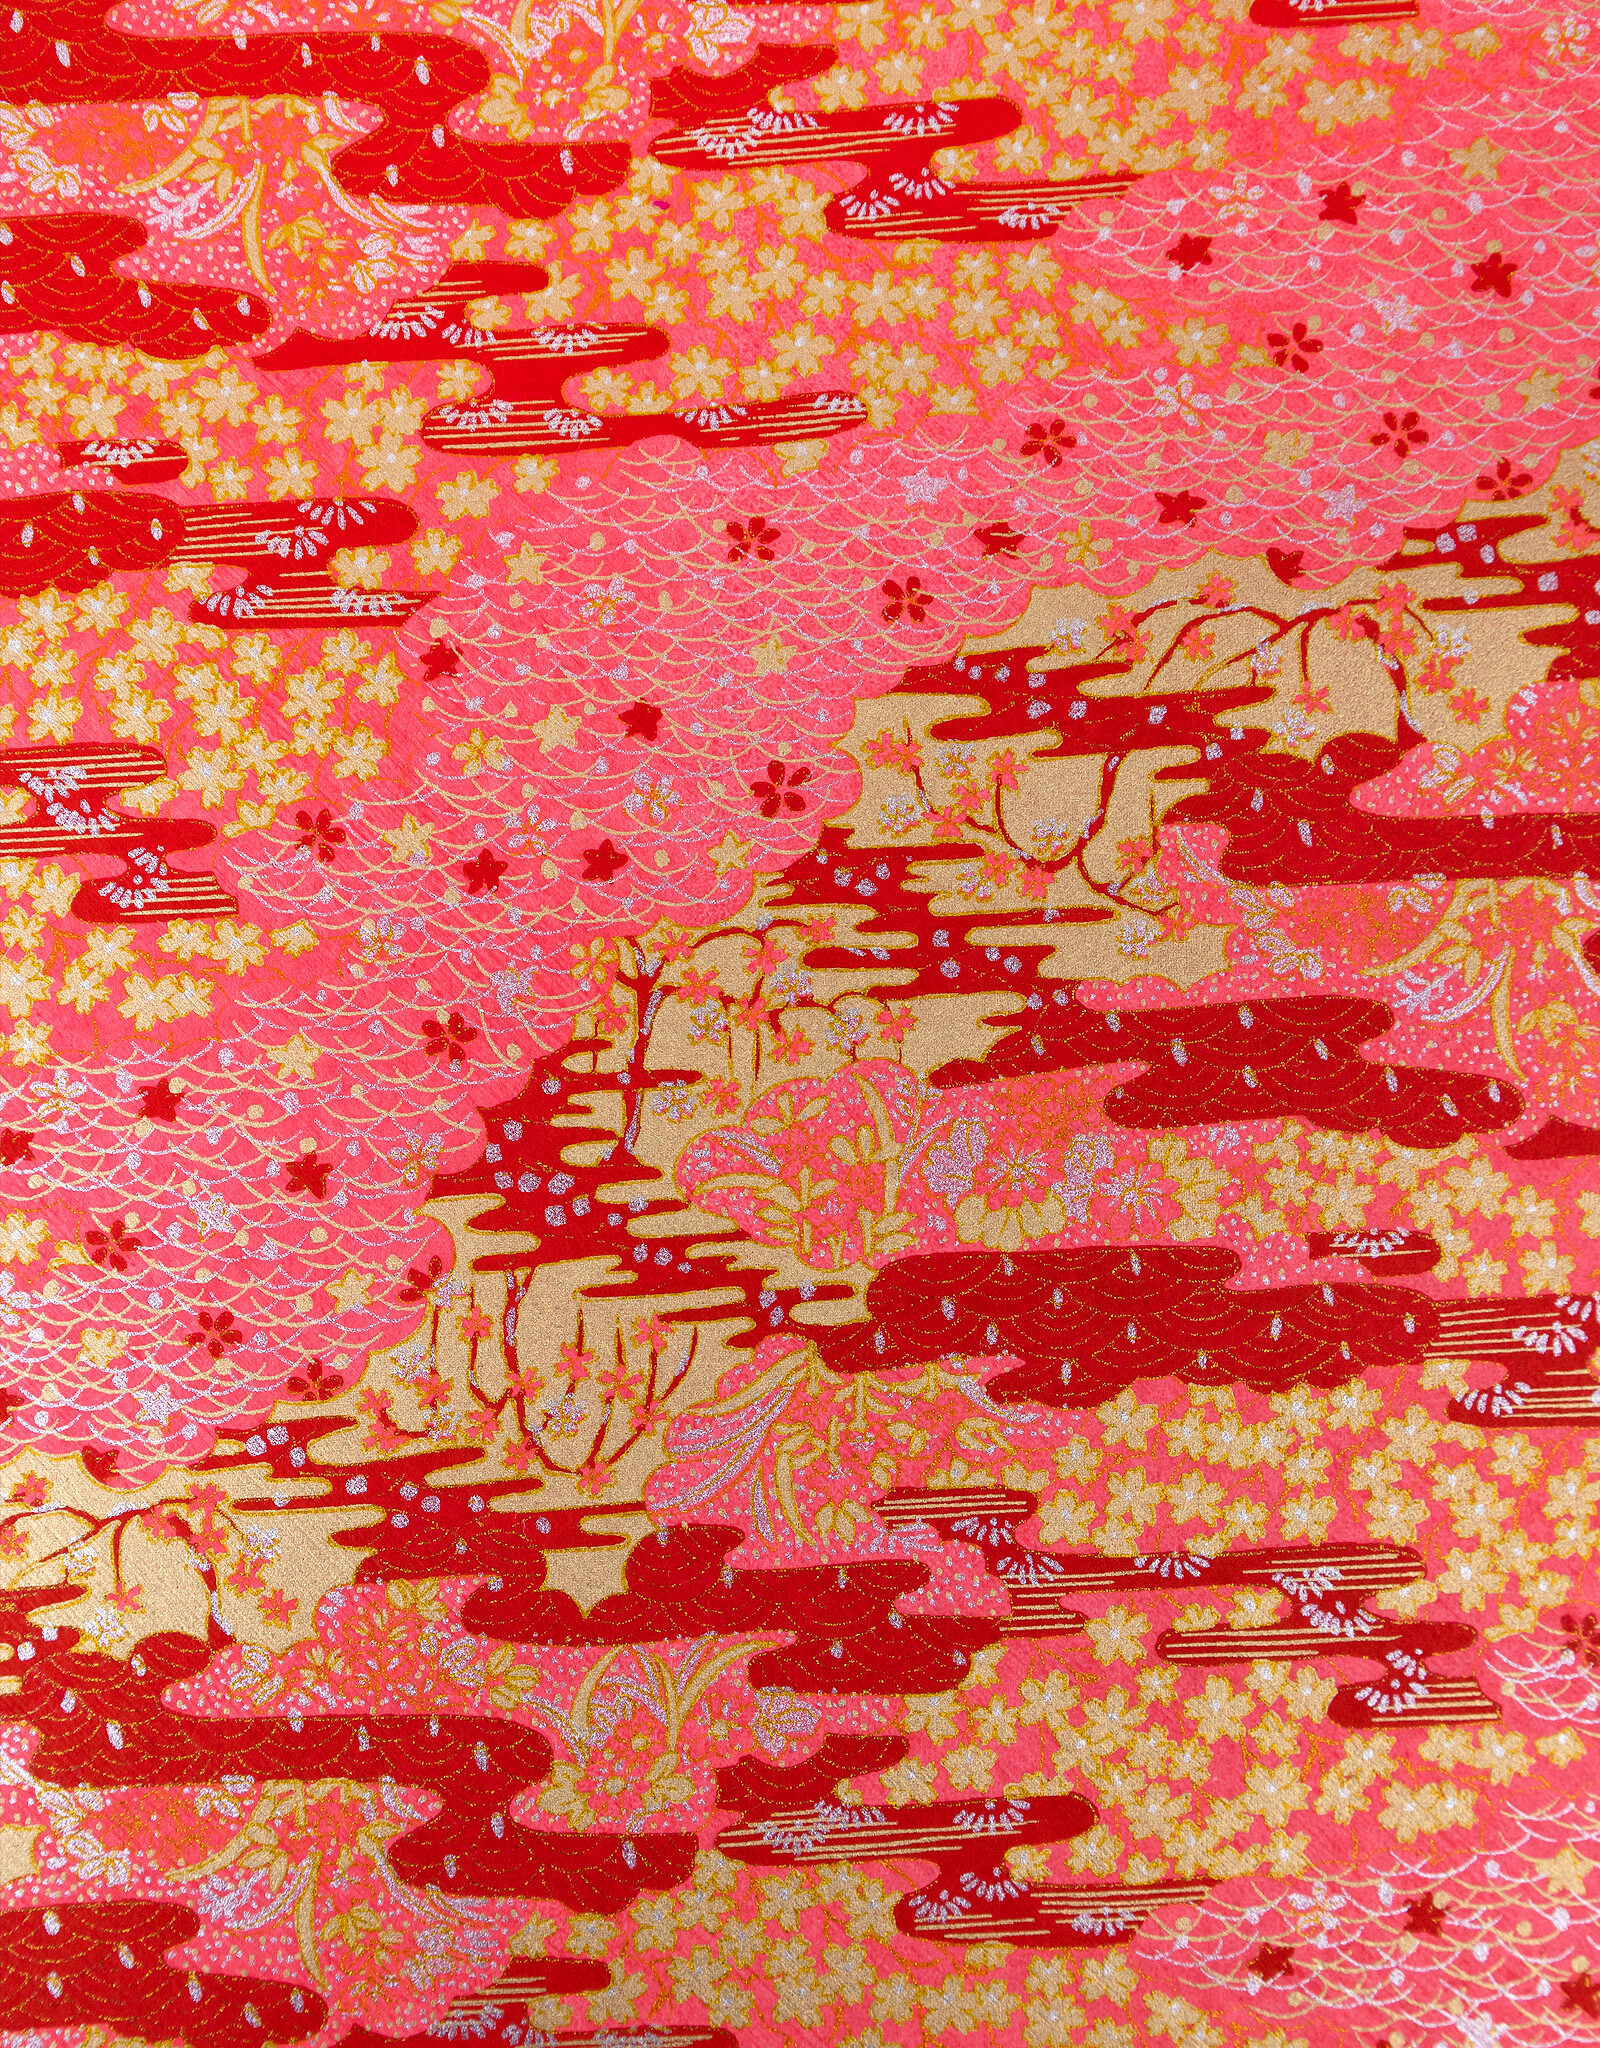 AITOH Aitoh Kirara: Light Pink, Red, Gold Flowers, 18.25" x 25"